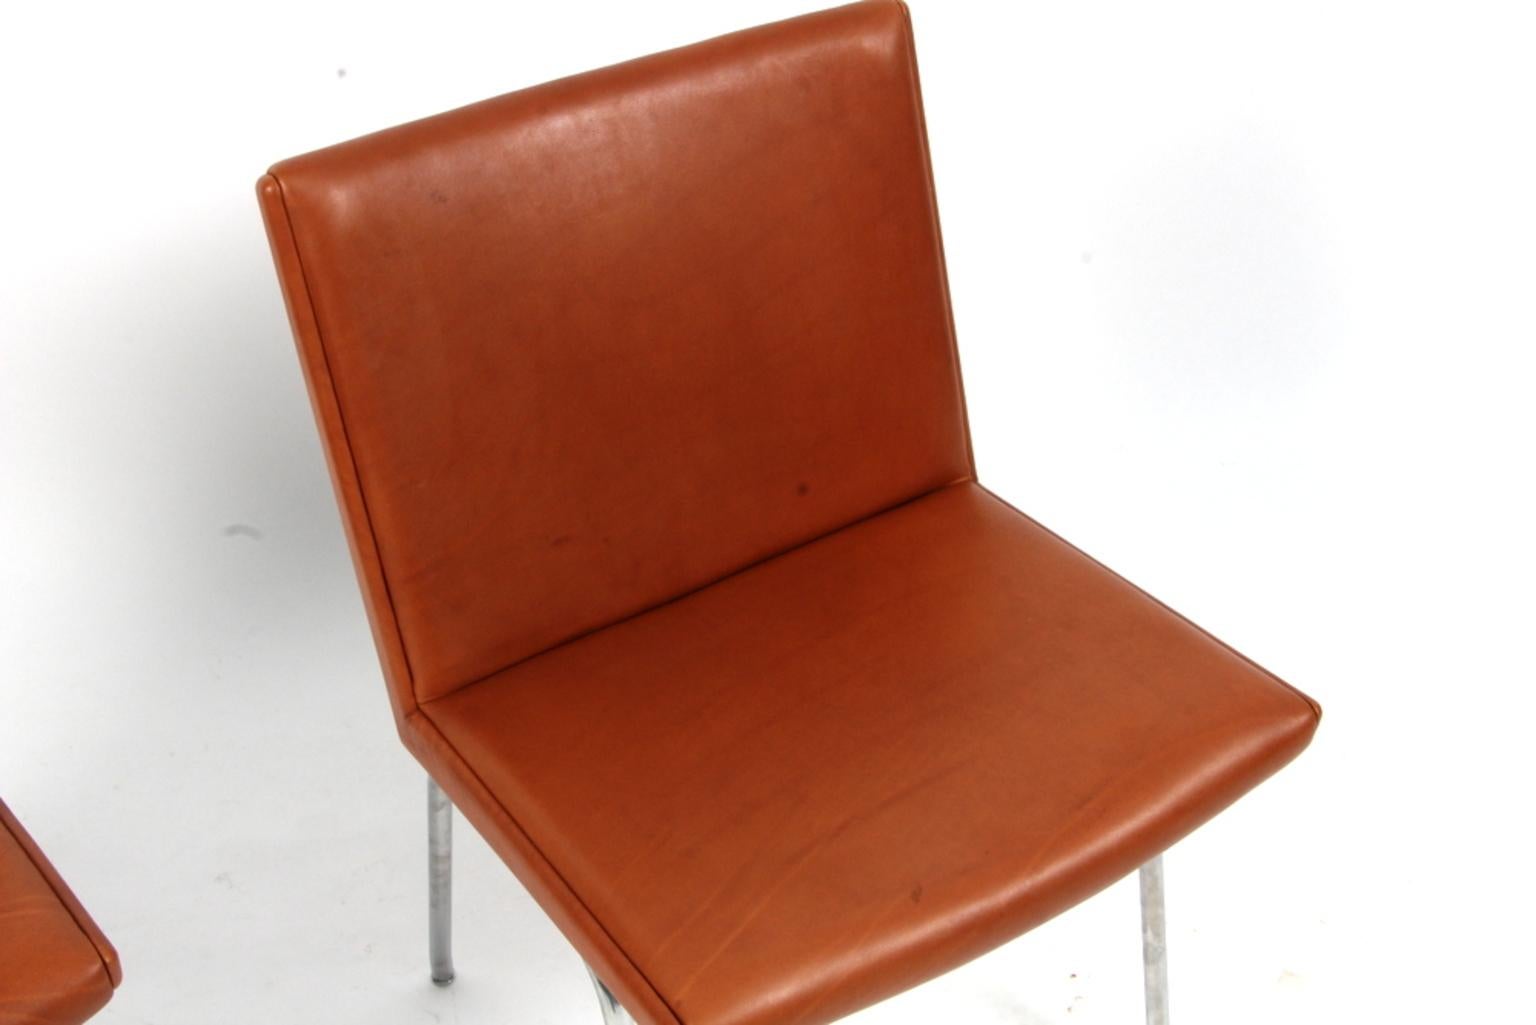 Hans J. Wegner lufthavnsttole designed for Kastrup Airport. New upholstered with cognac aniline leather

Base in steel.

Model AP39, made by AP stolen.